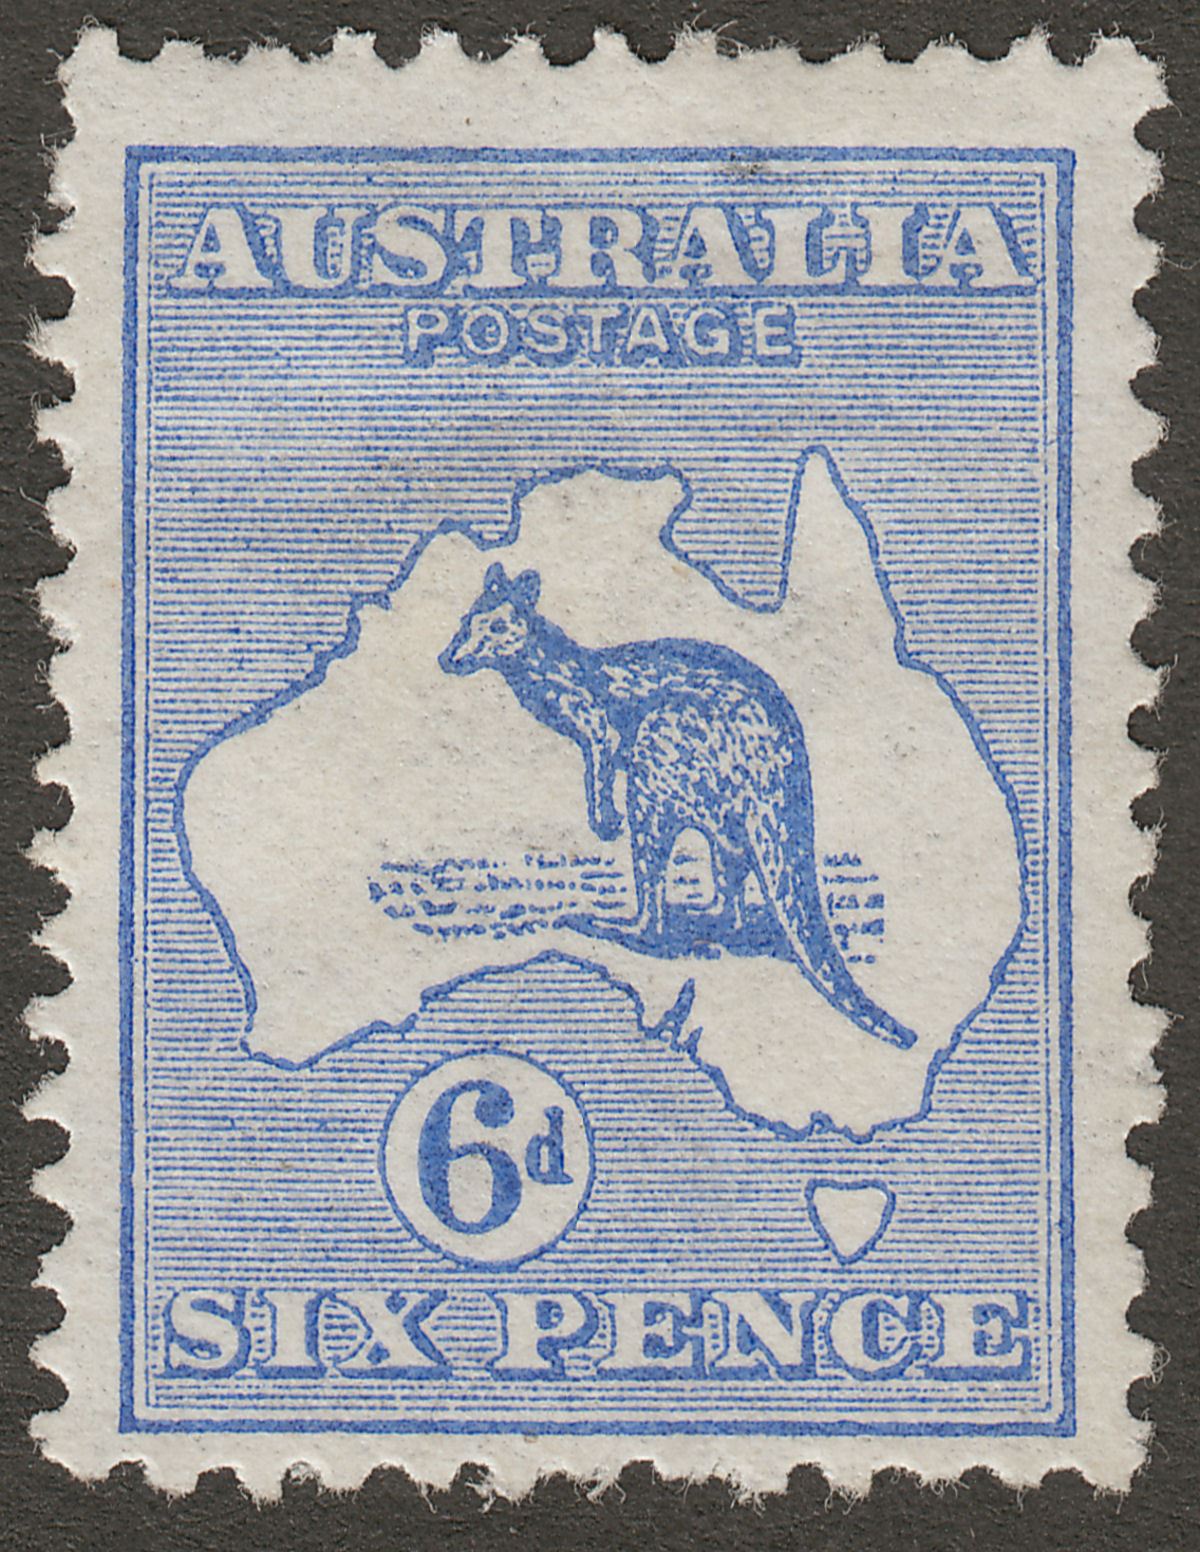 Australia 1913 KGV Roo 6d Ultramarine wmk Wide Crown Mint SG9 cat £75 with thin